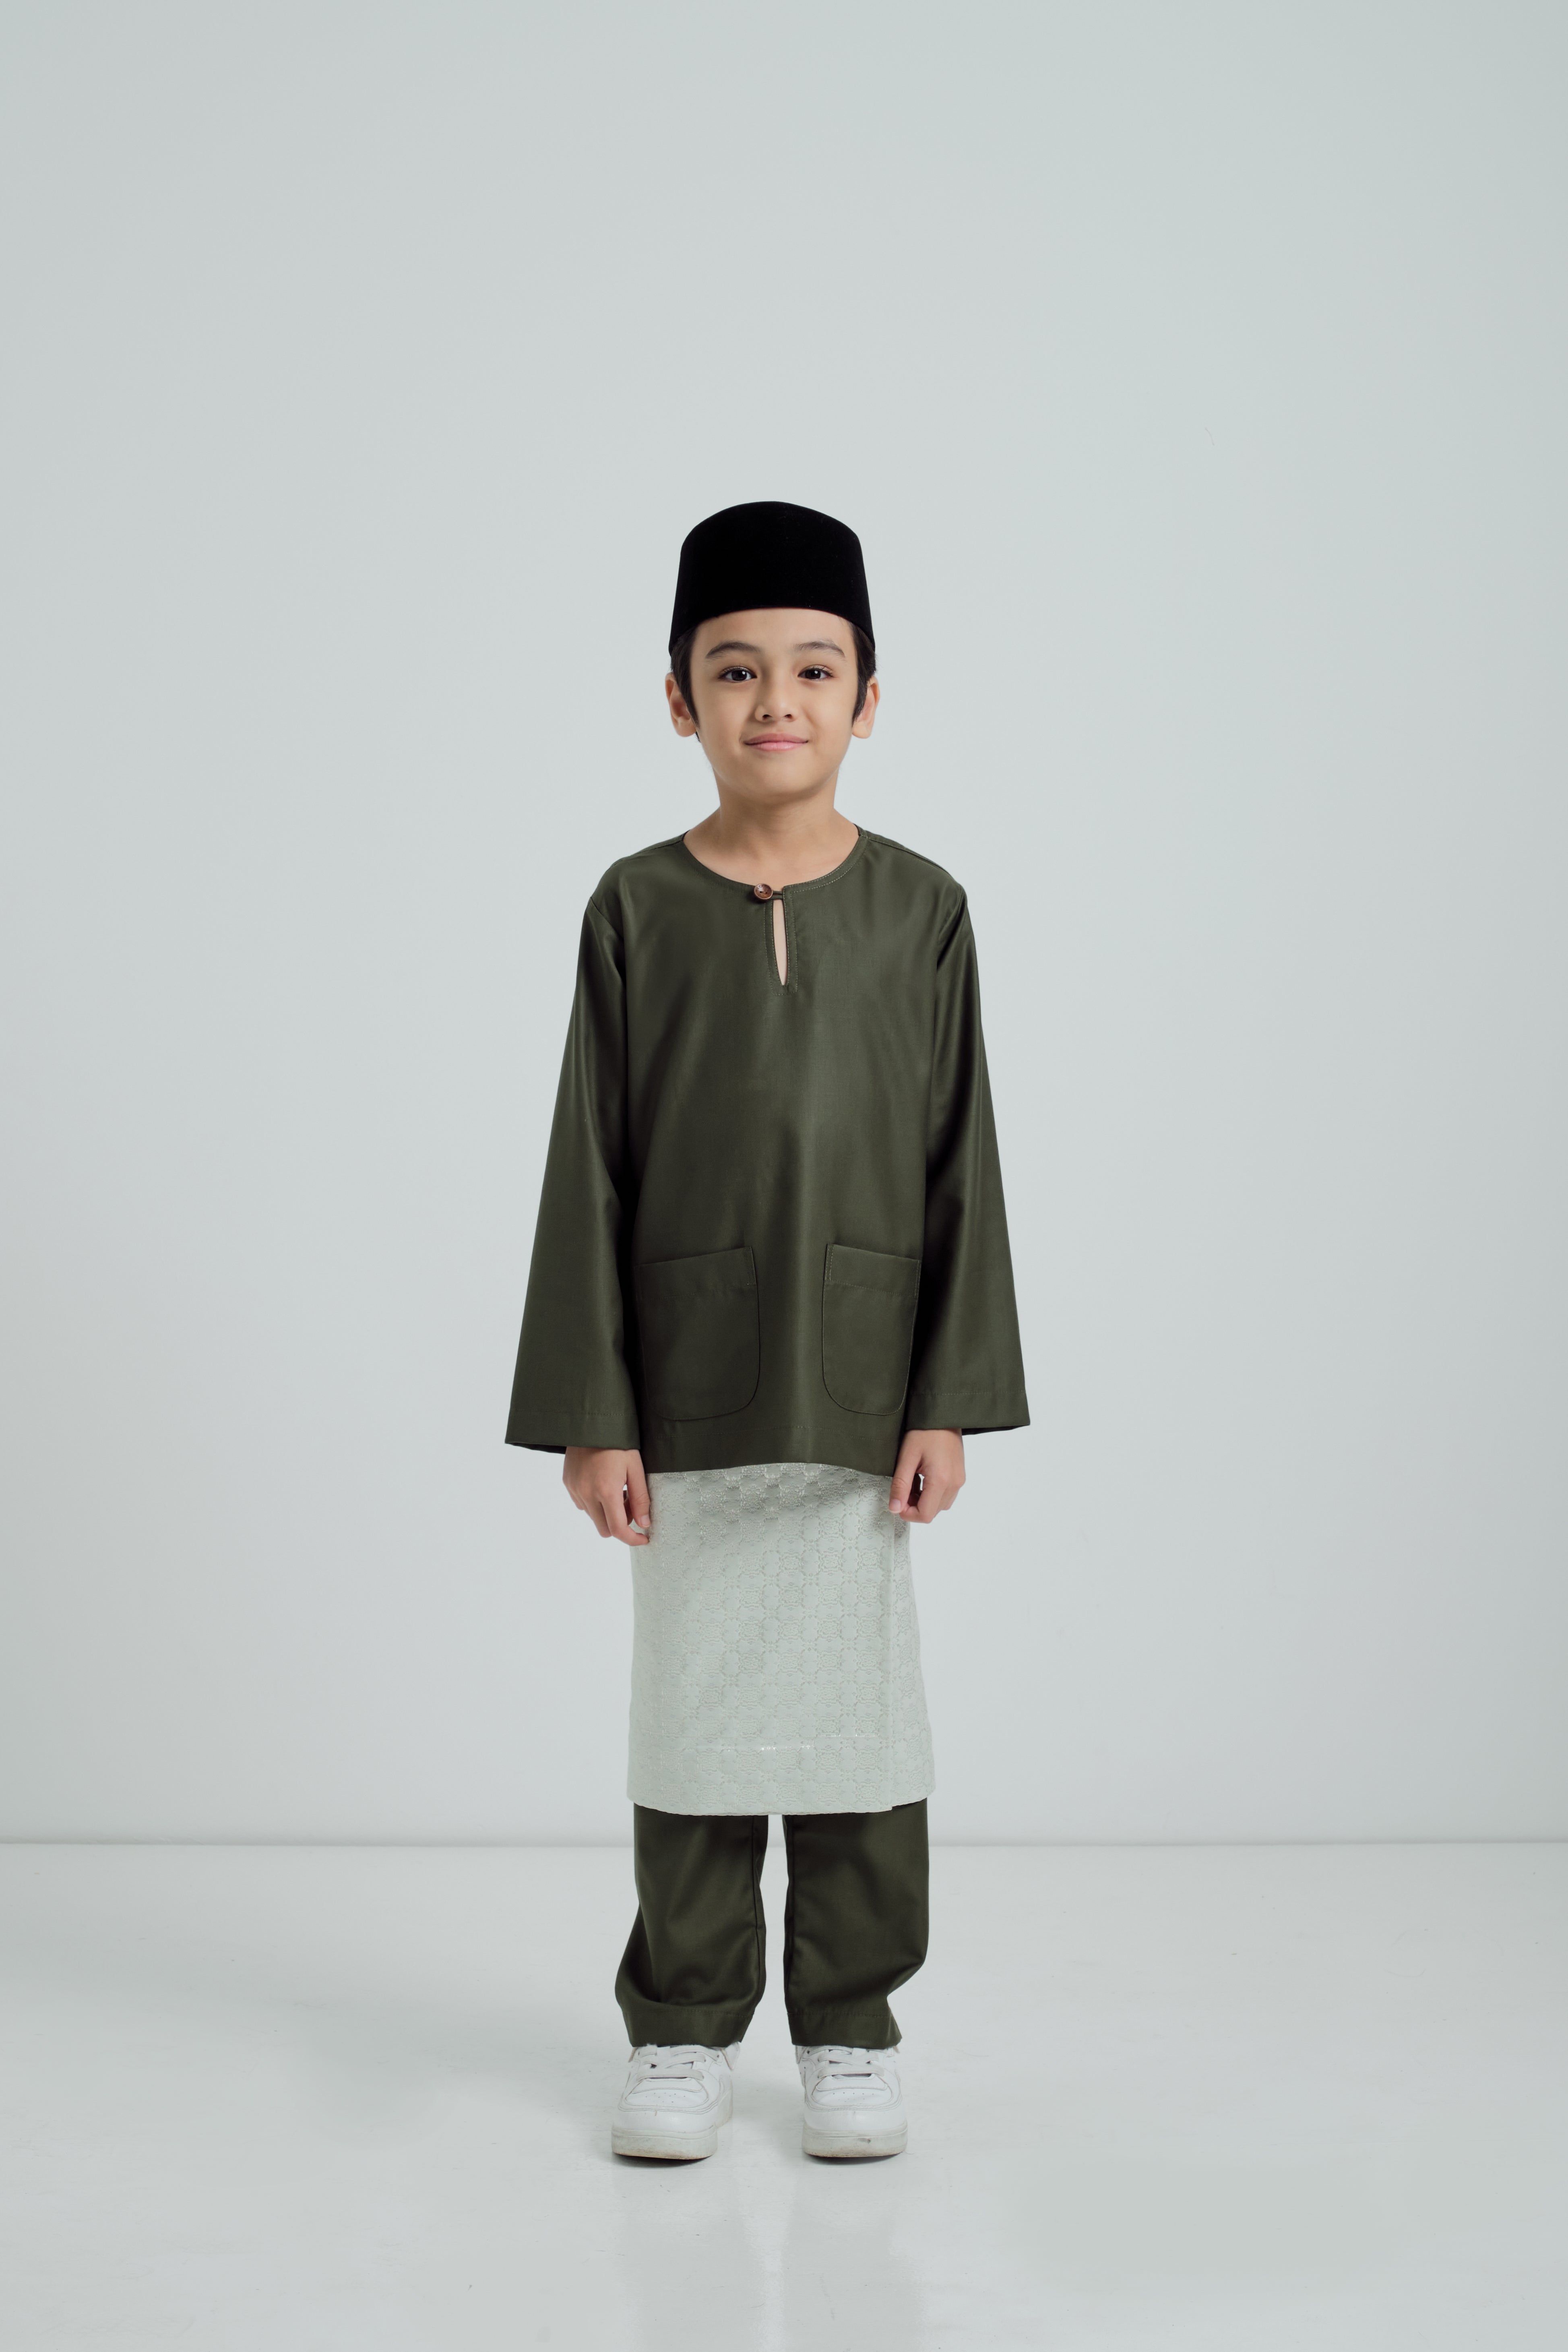 Patawali Boys Baju Melayu Teluk Belanga - Army Green